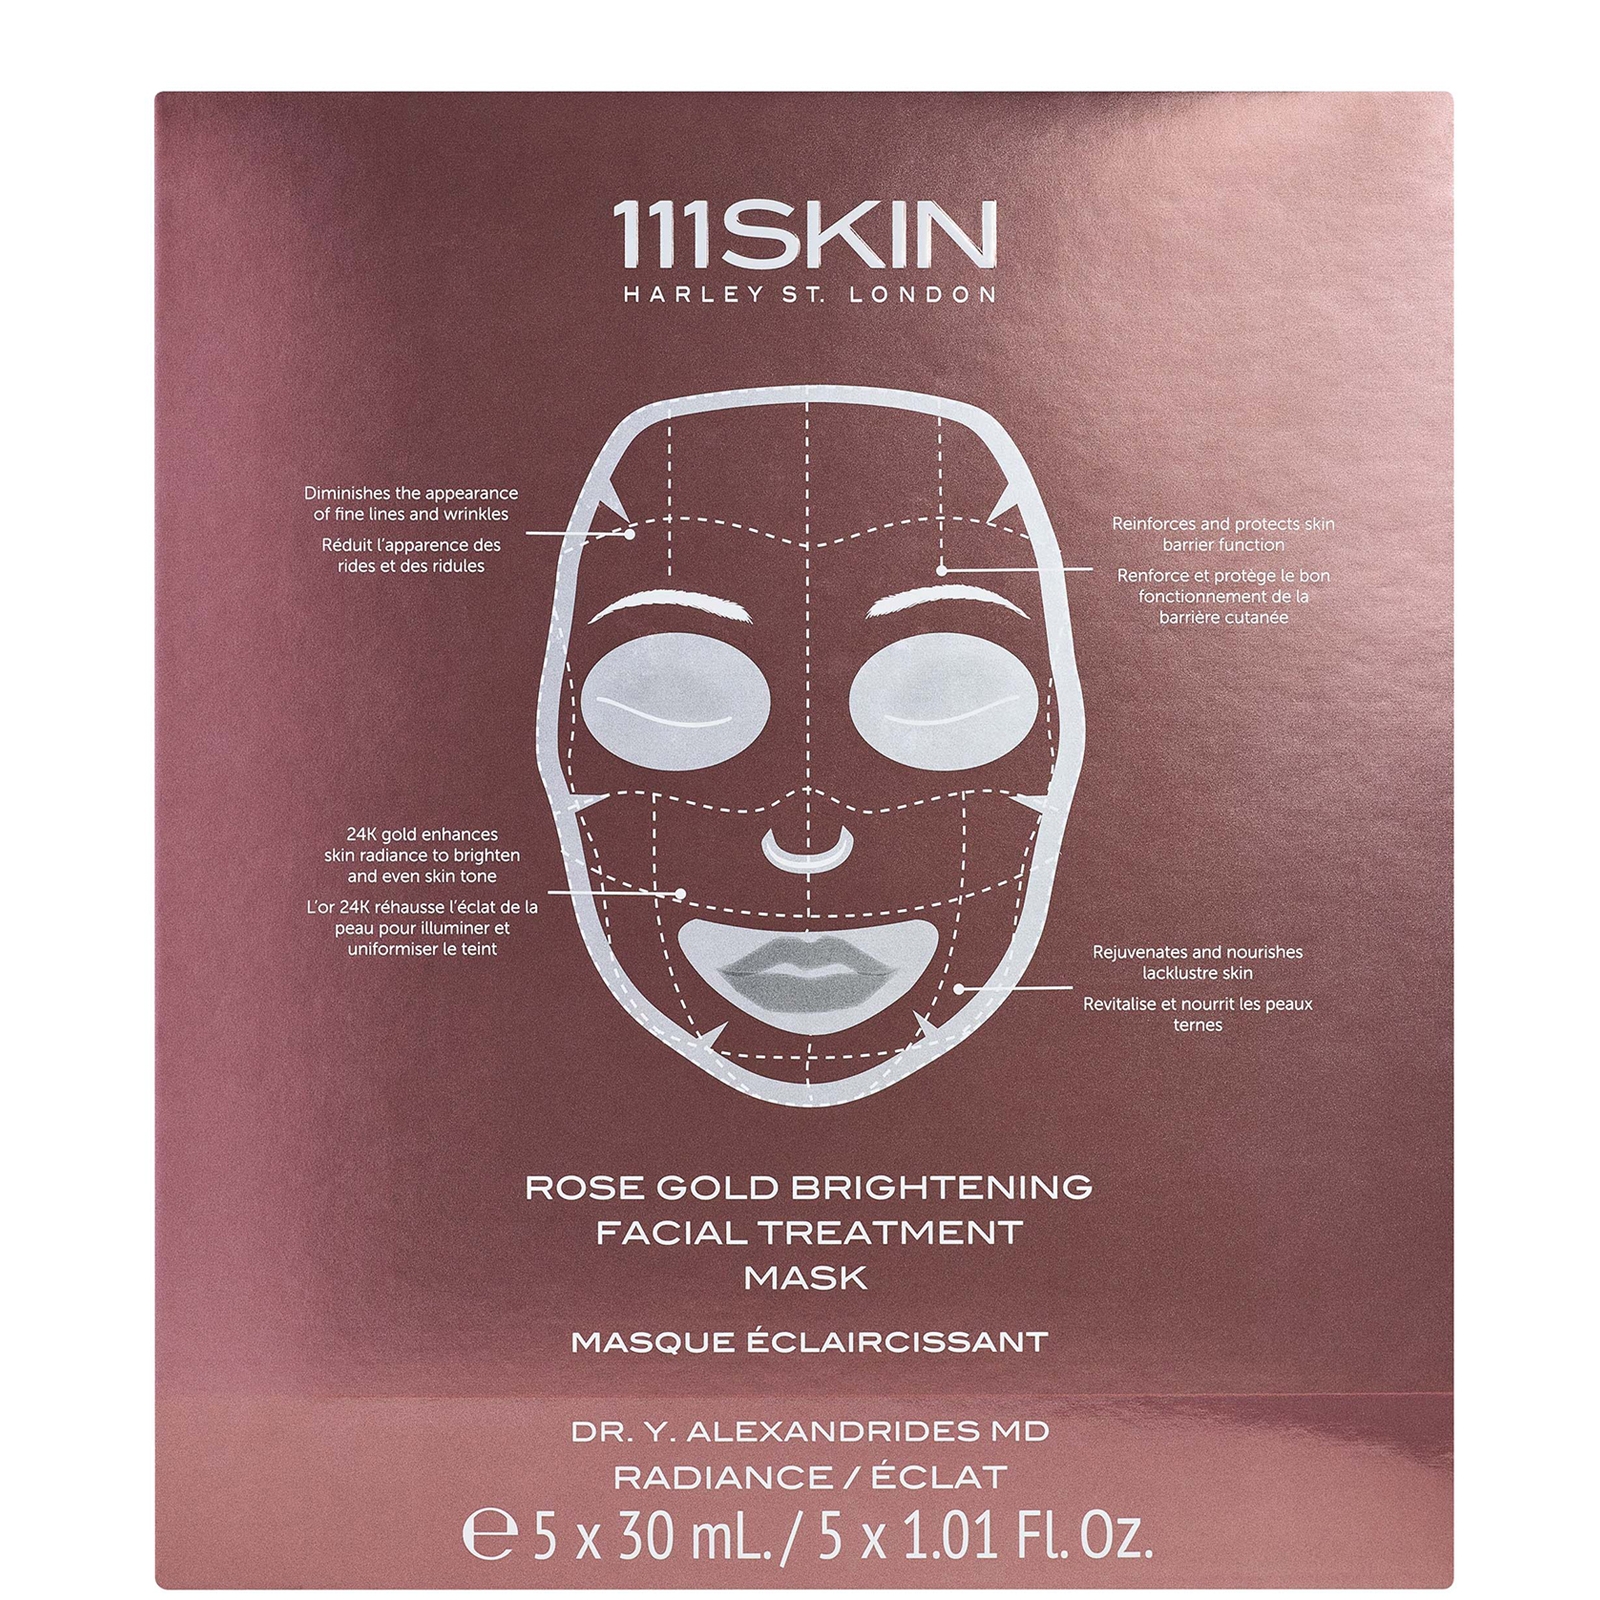 Image of 111SKIN Rose Gold Brightening Facial Treatment Mask Box 5x30ml